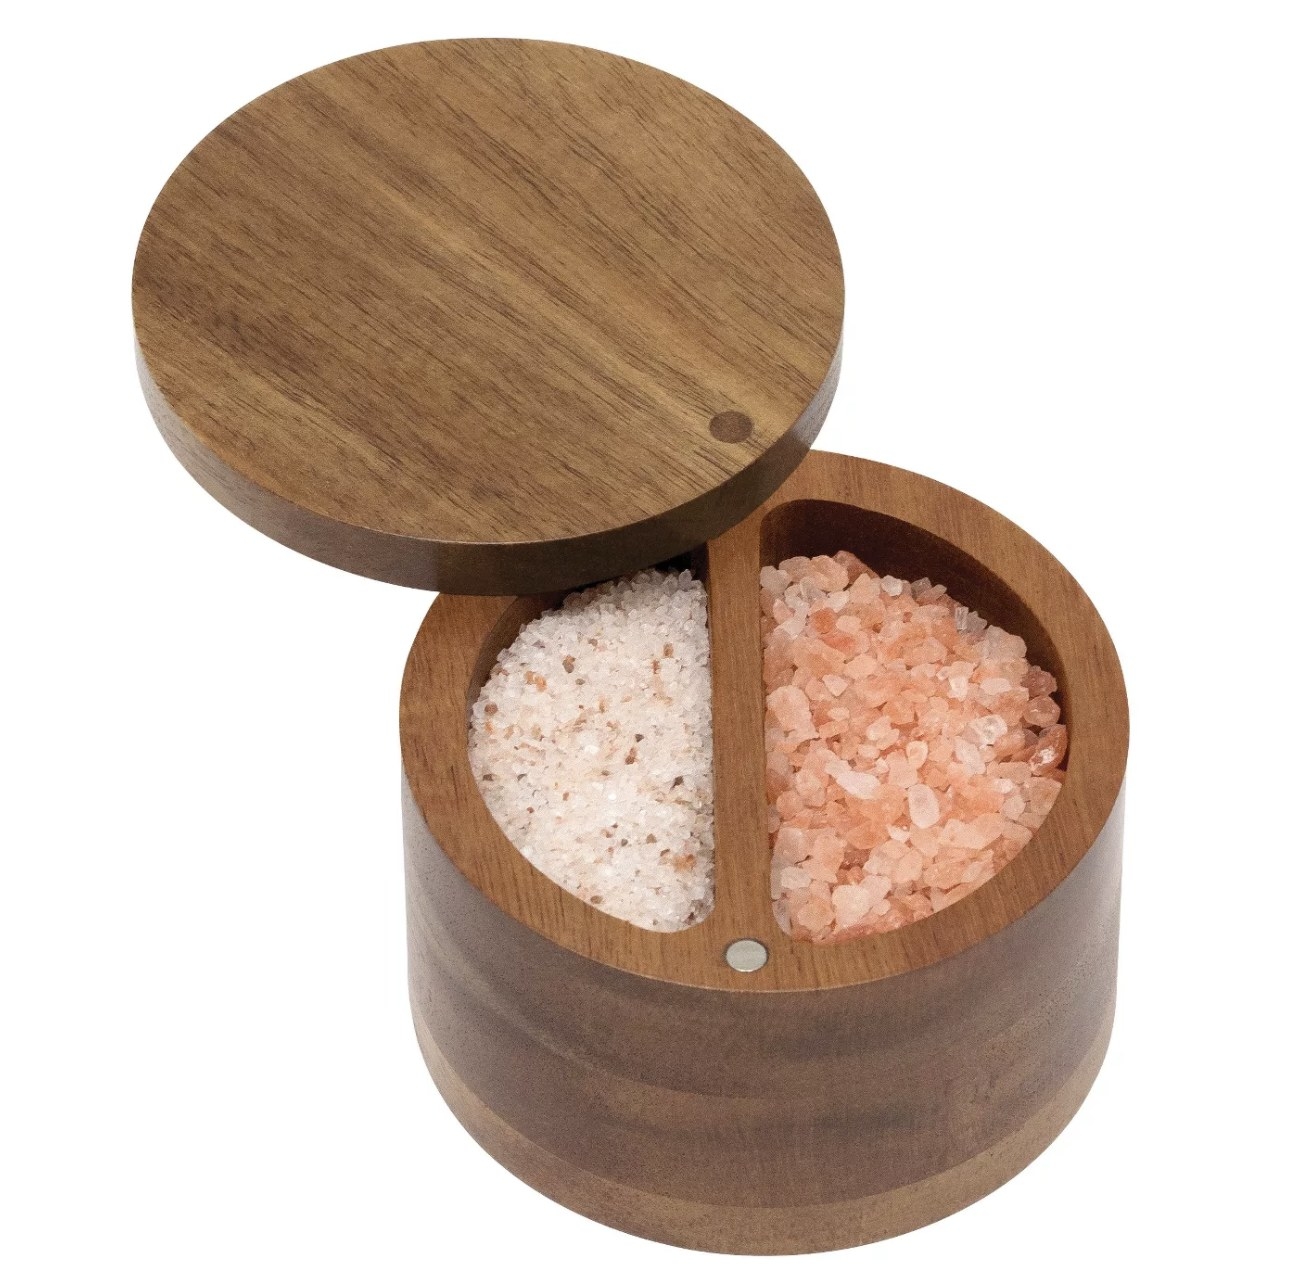 Salt box with salt inside